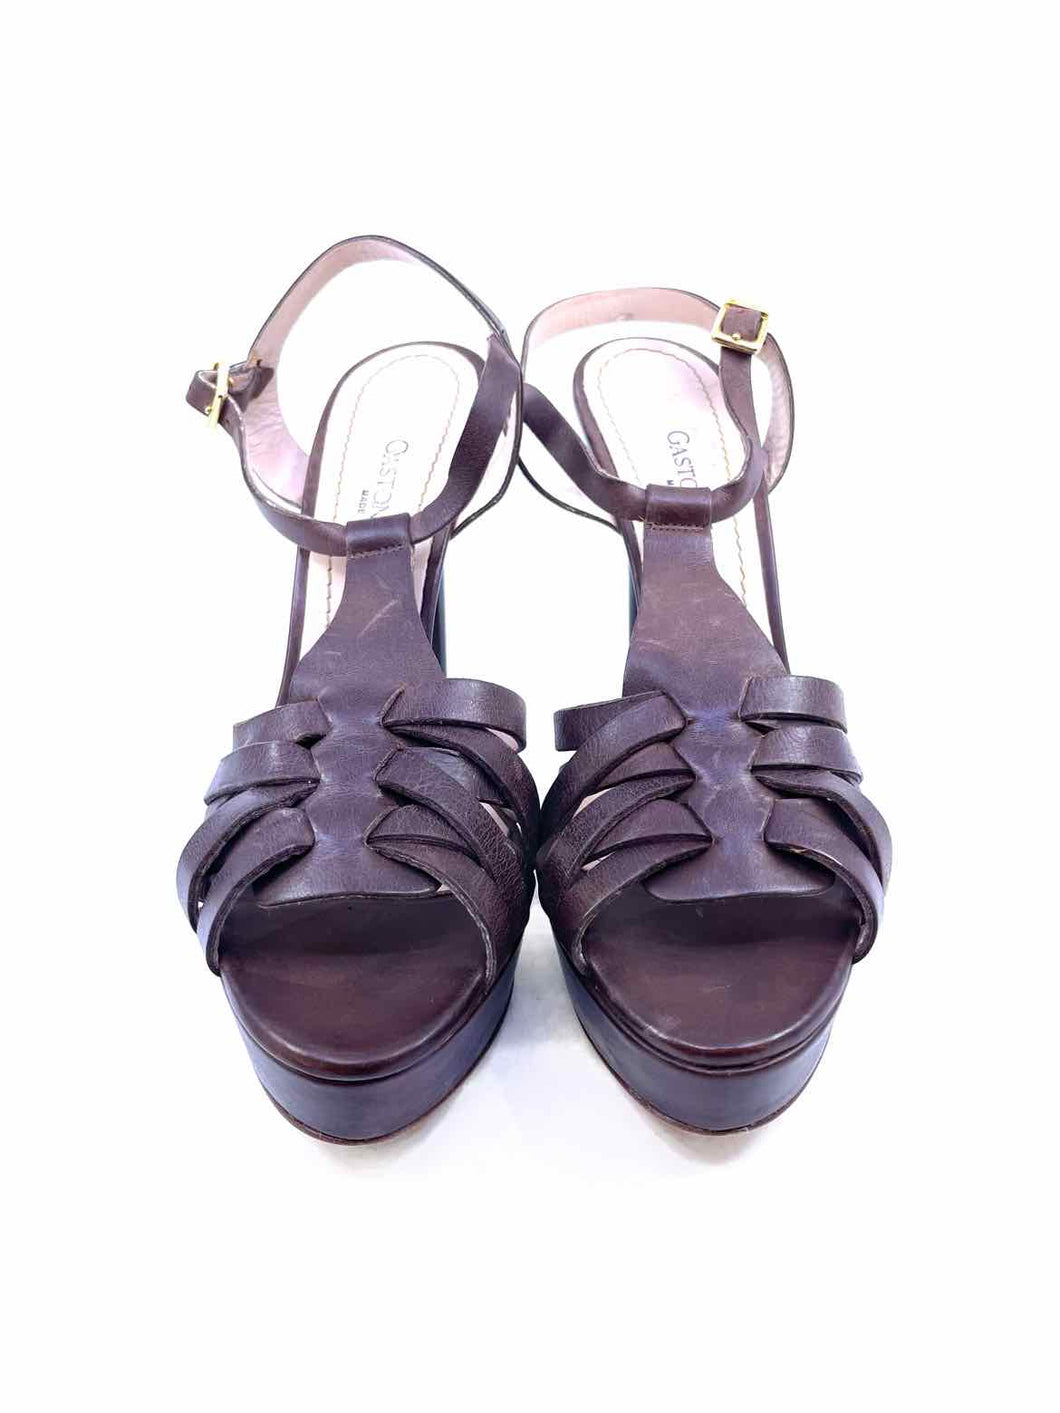 GASTONE LUCIOLI Size 10 Brown Leather Sandals